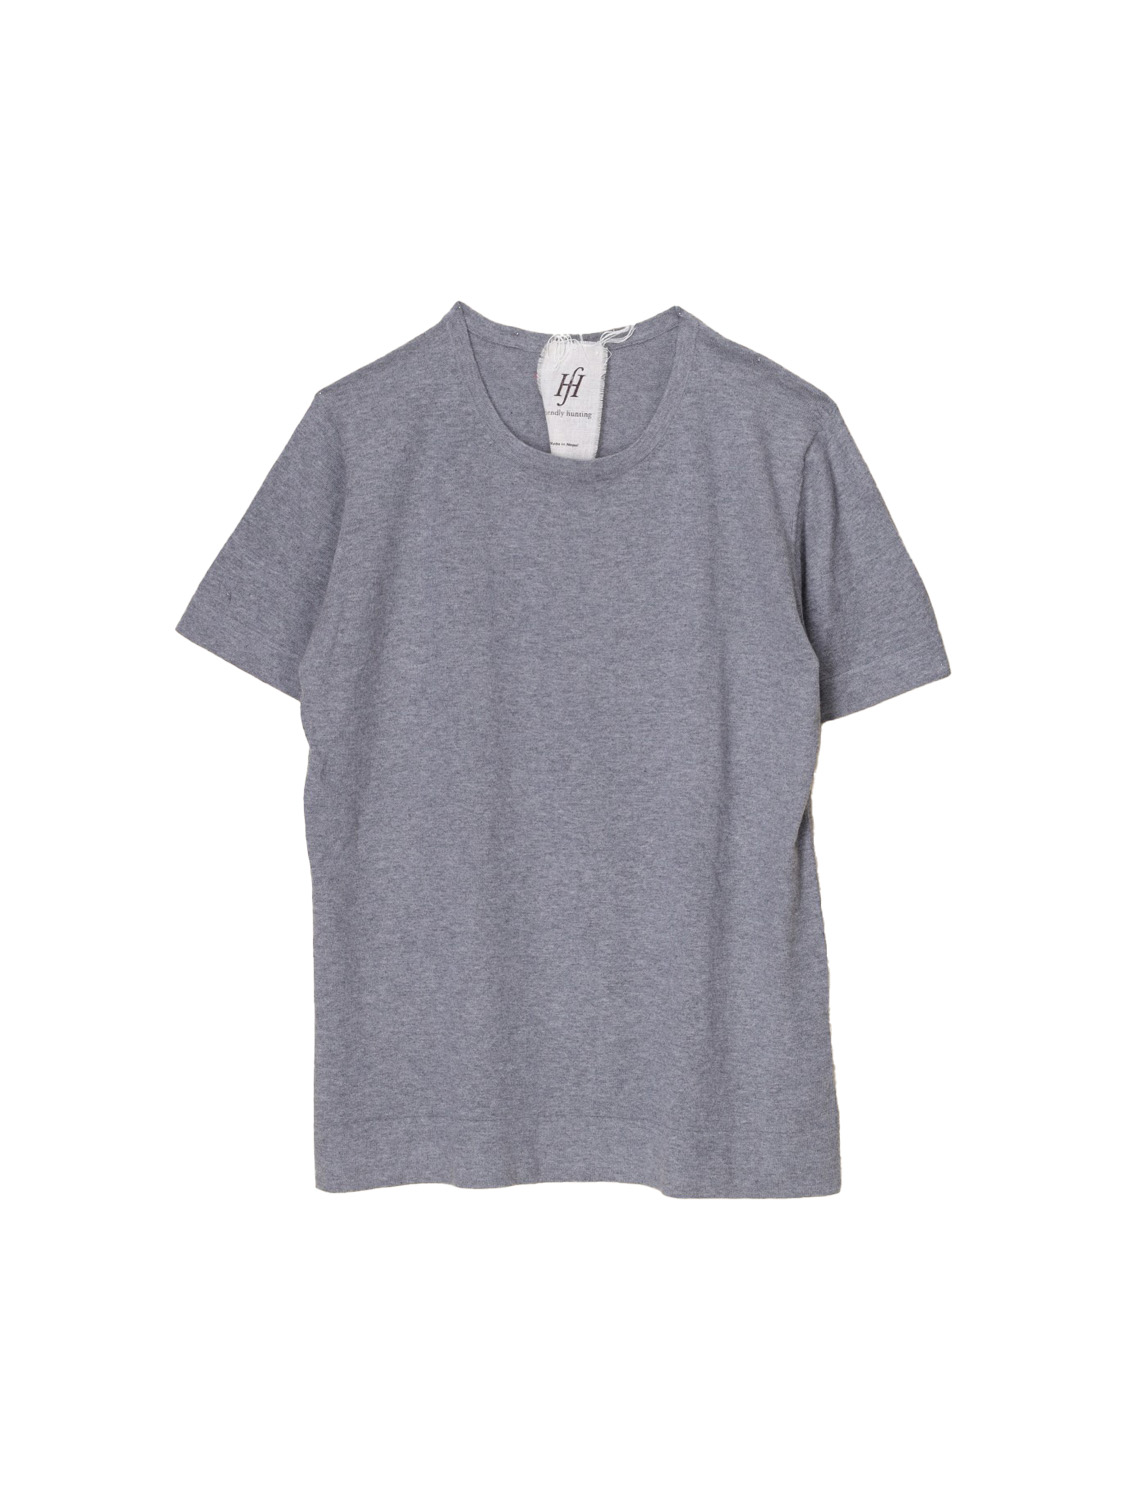 friendly hunting CC Uni – Shirt aus Baumwoll-Cashmere-Mix   grau S